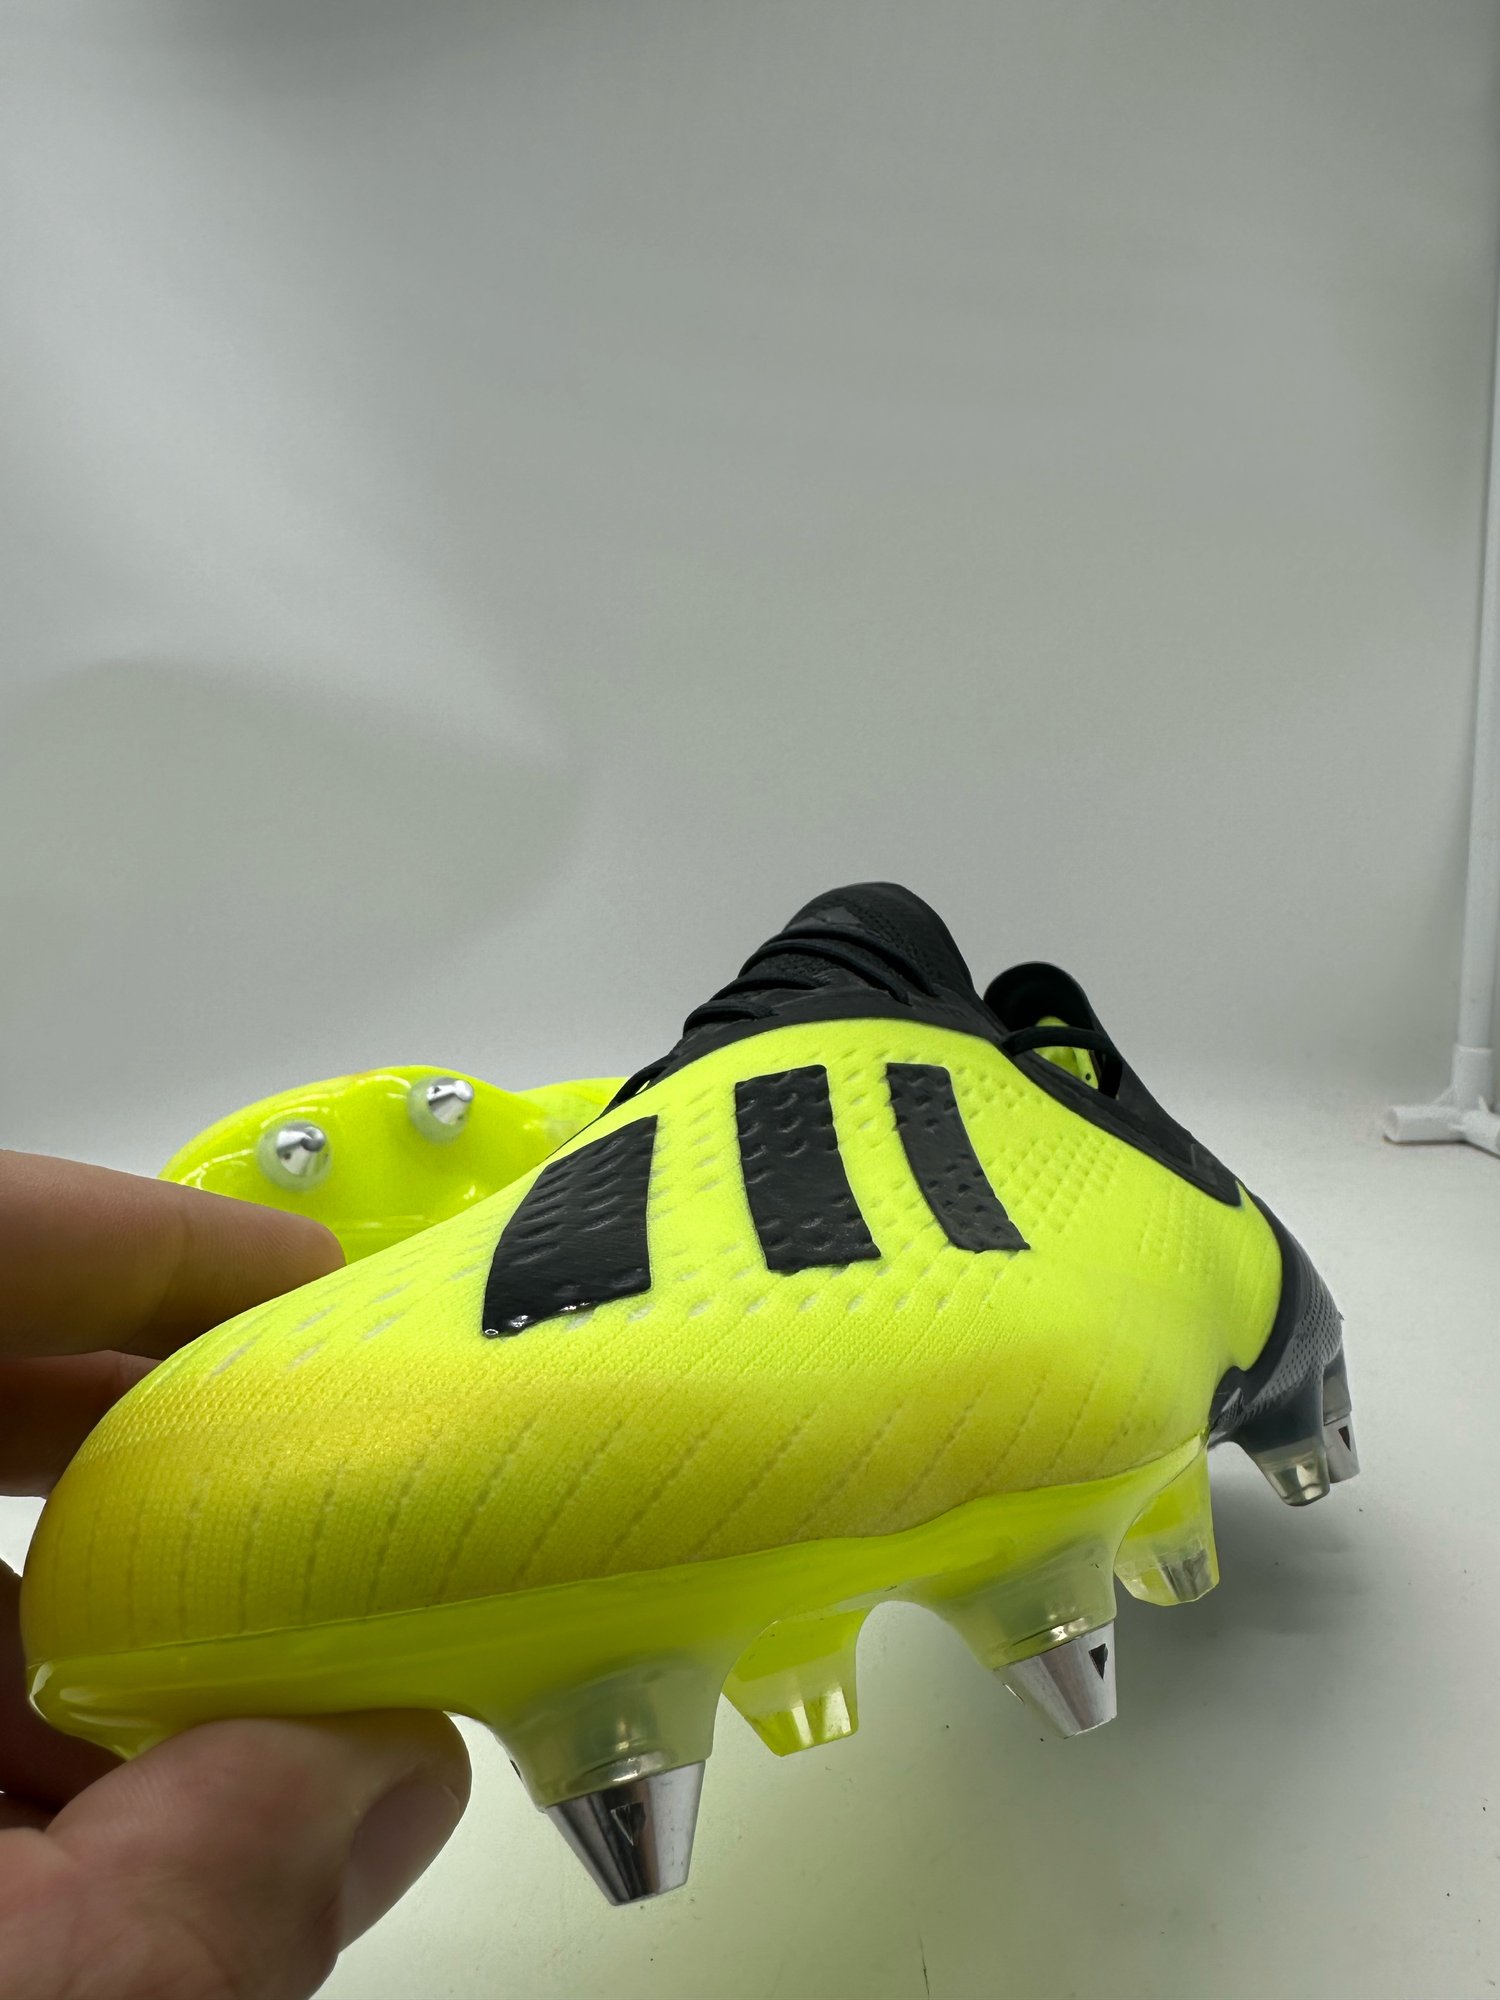 Image of Adidas 18.1 X Black Yellow SG 